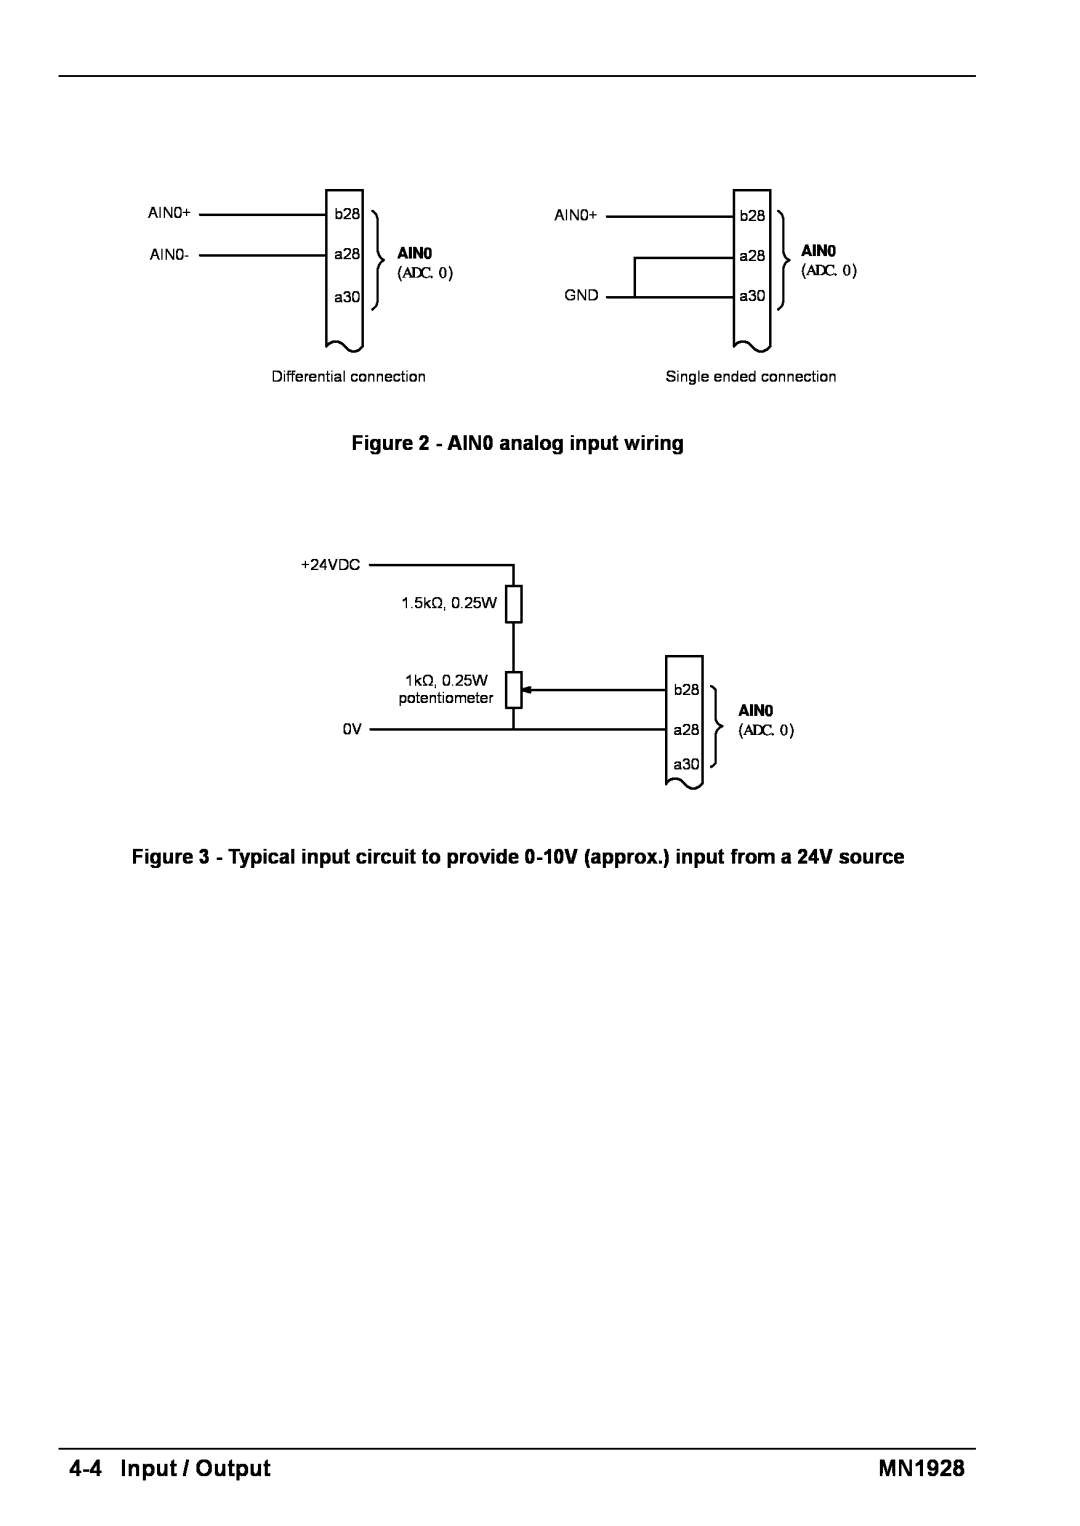 Baldor MN1928 installation manual 4-4Input / Output, AIN0 analog input wiring 